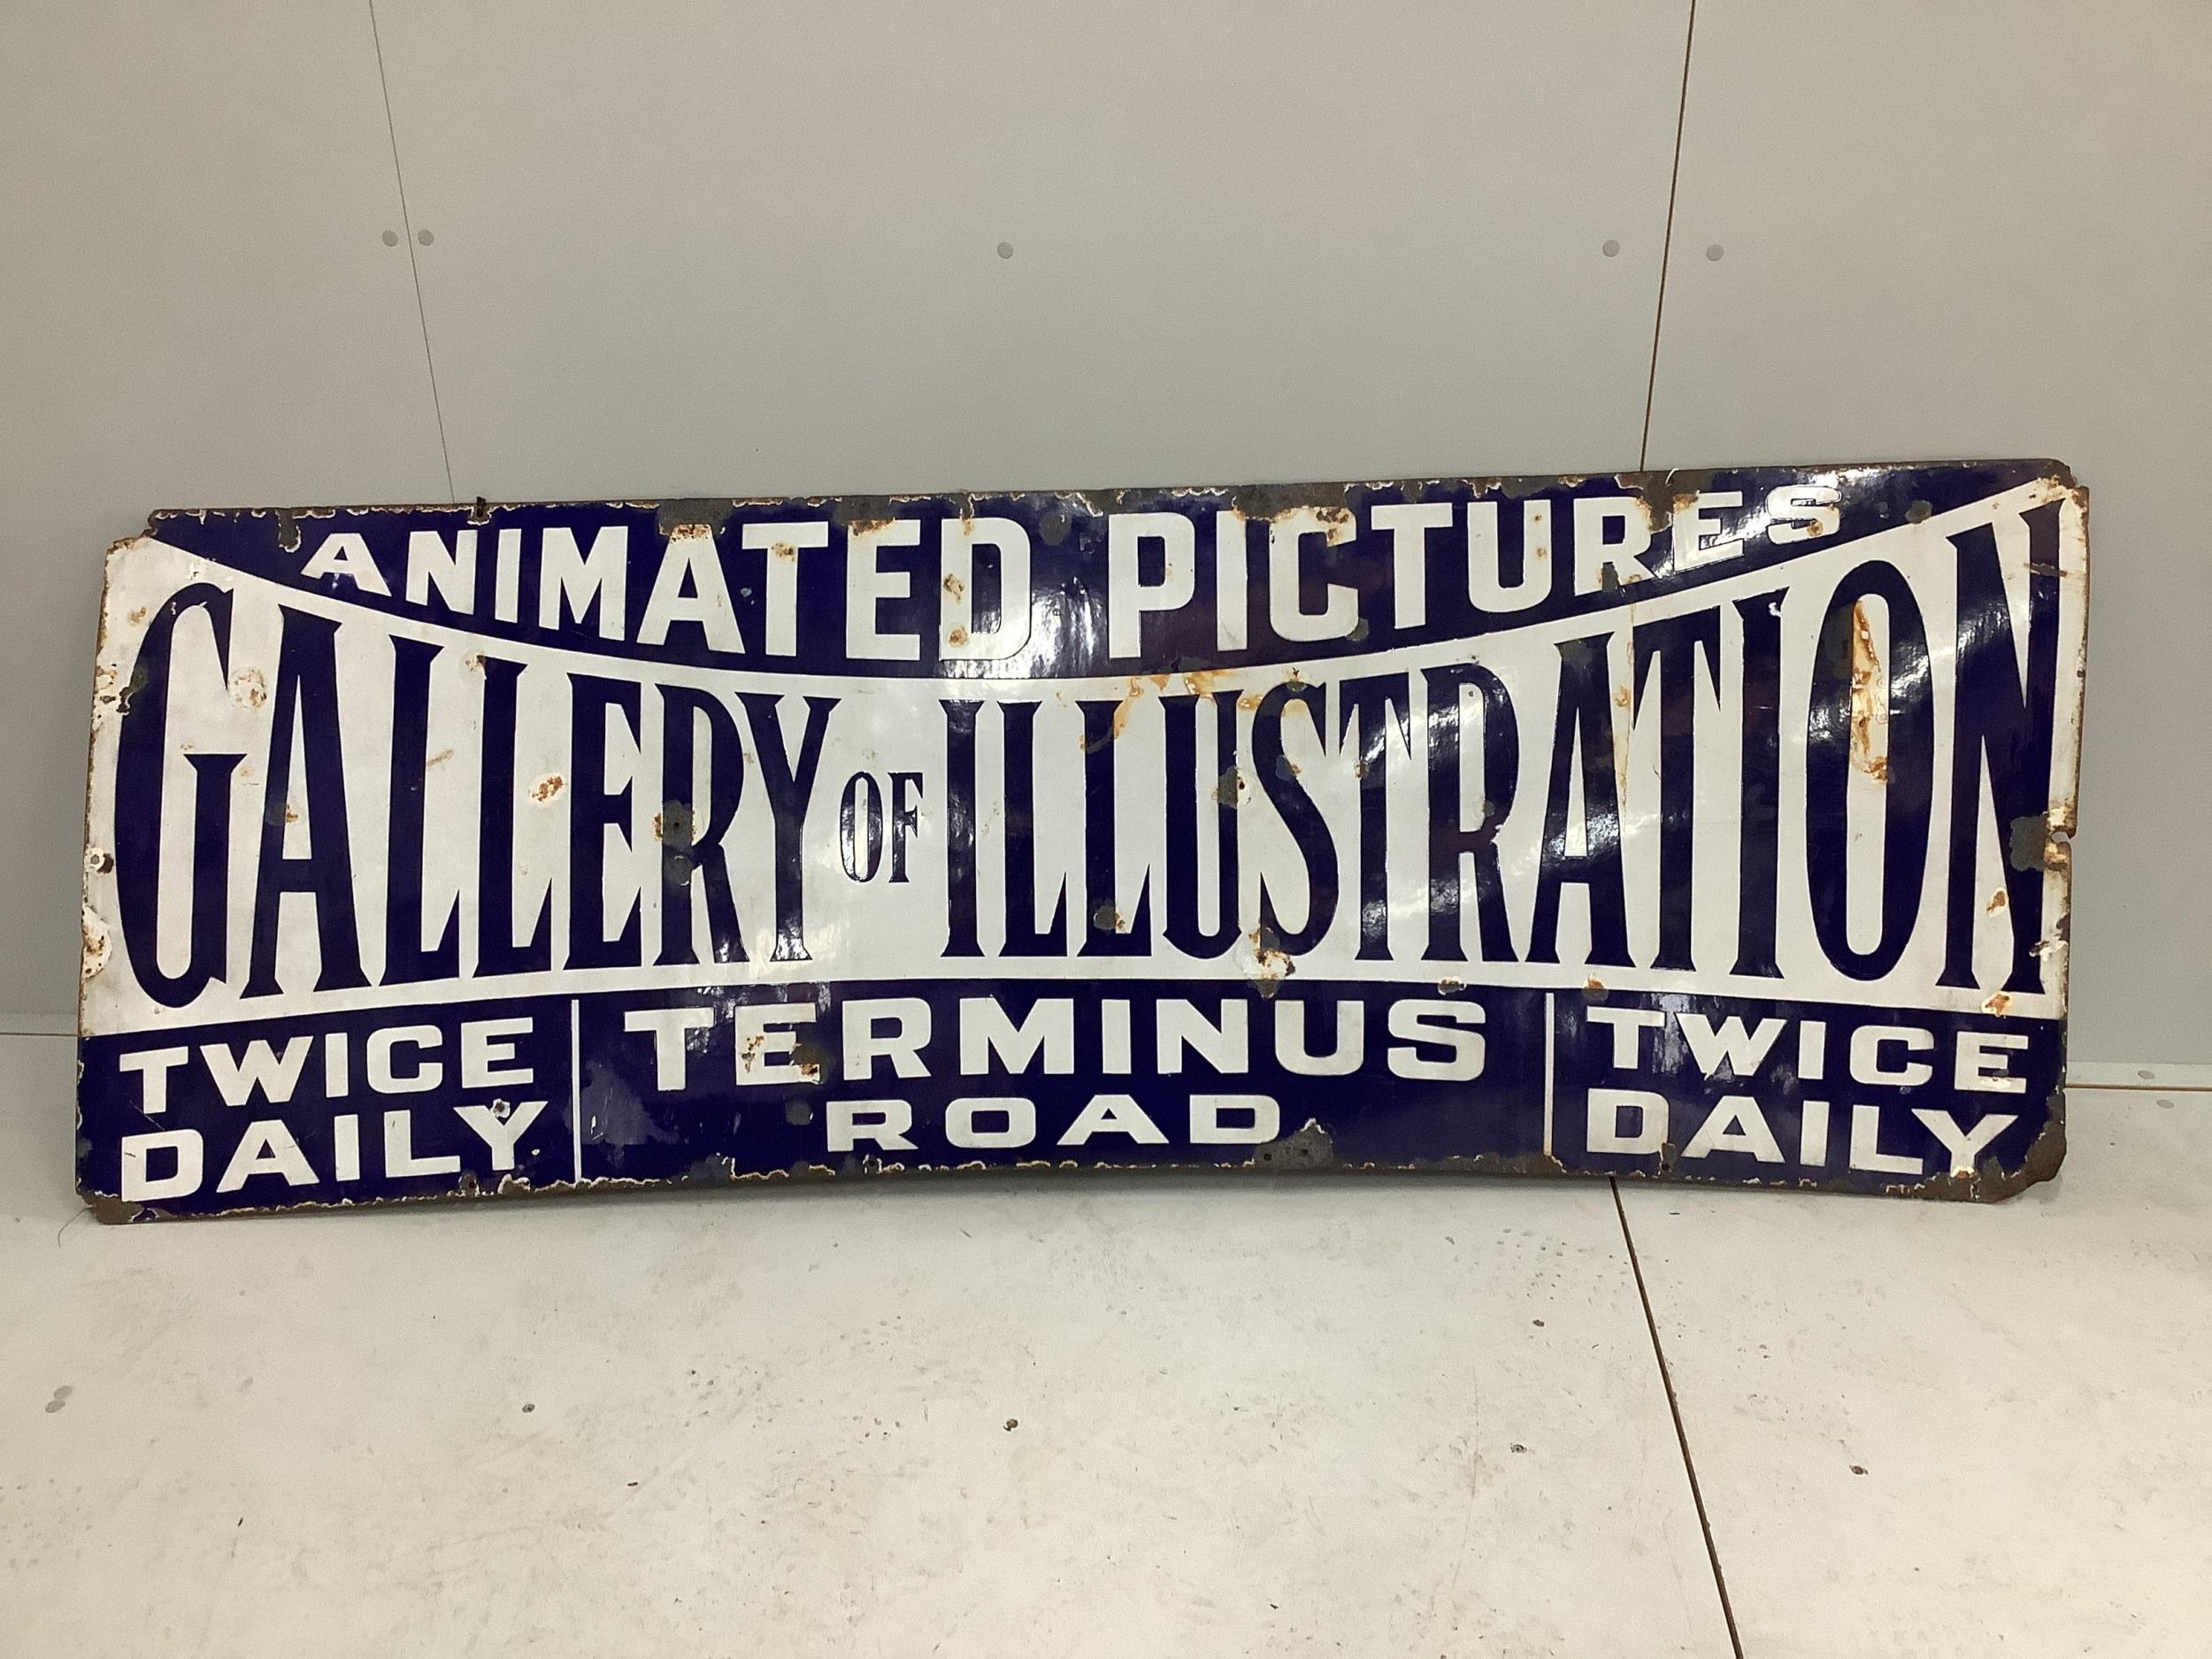 A rectangular enamel sign 'Gallery of Illustration', width 201cm, height 73cm